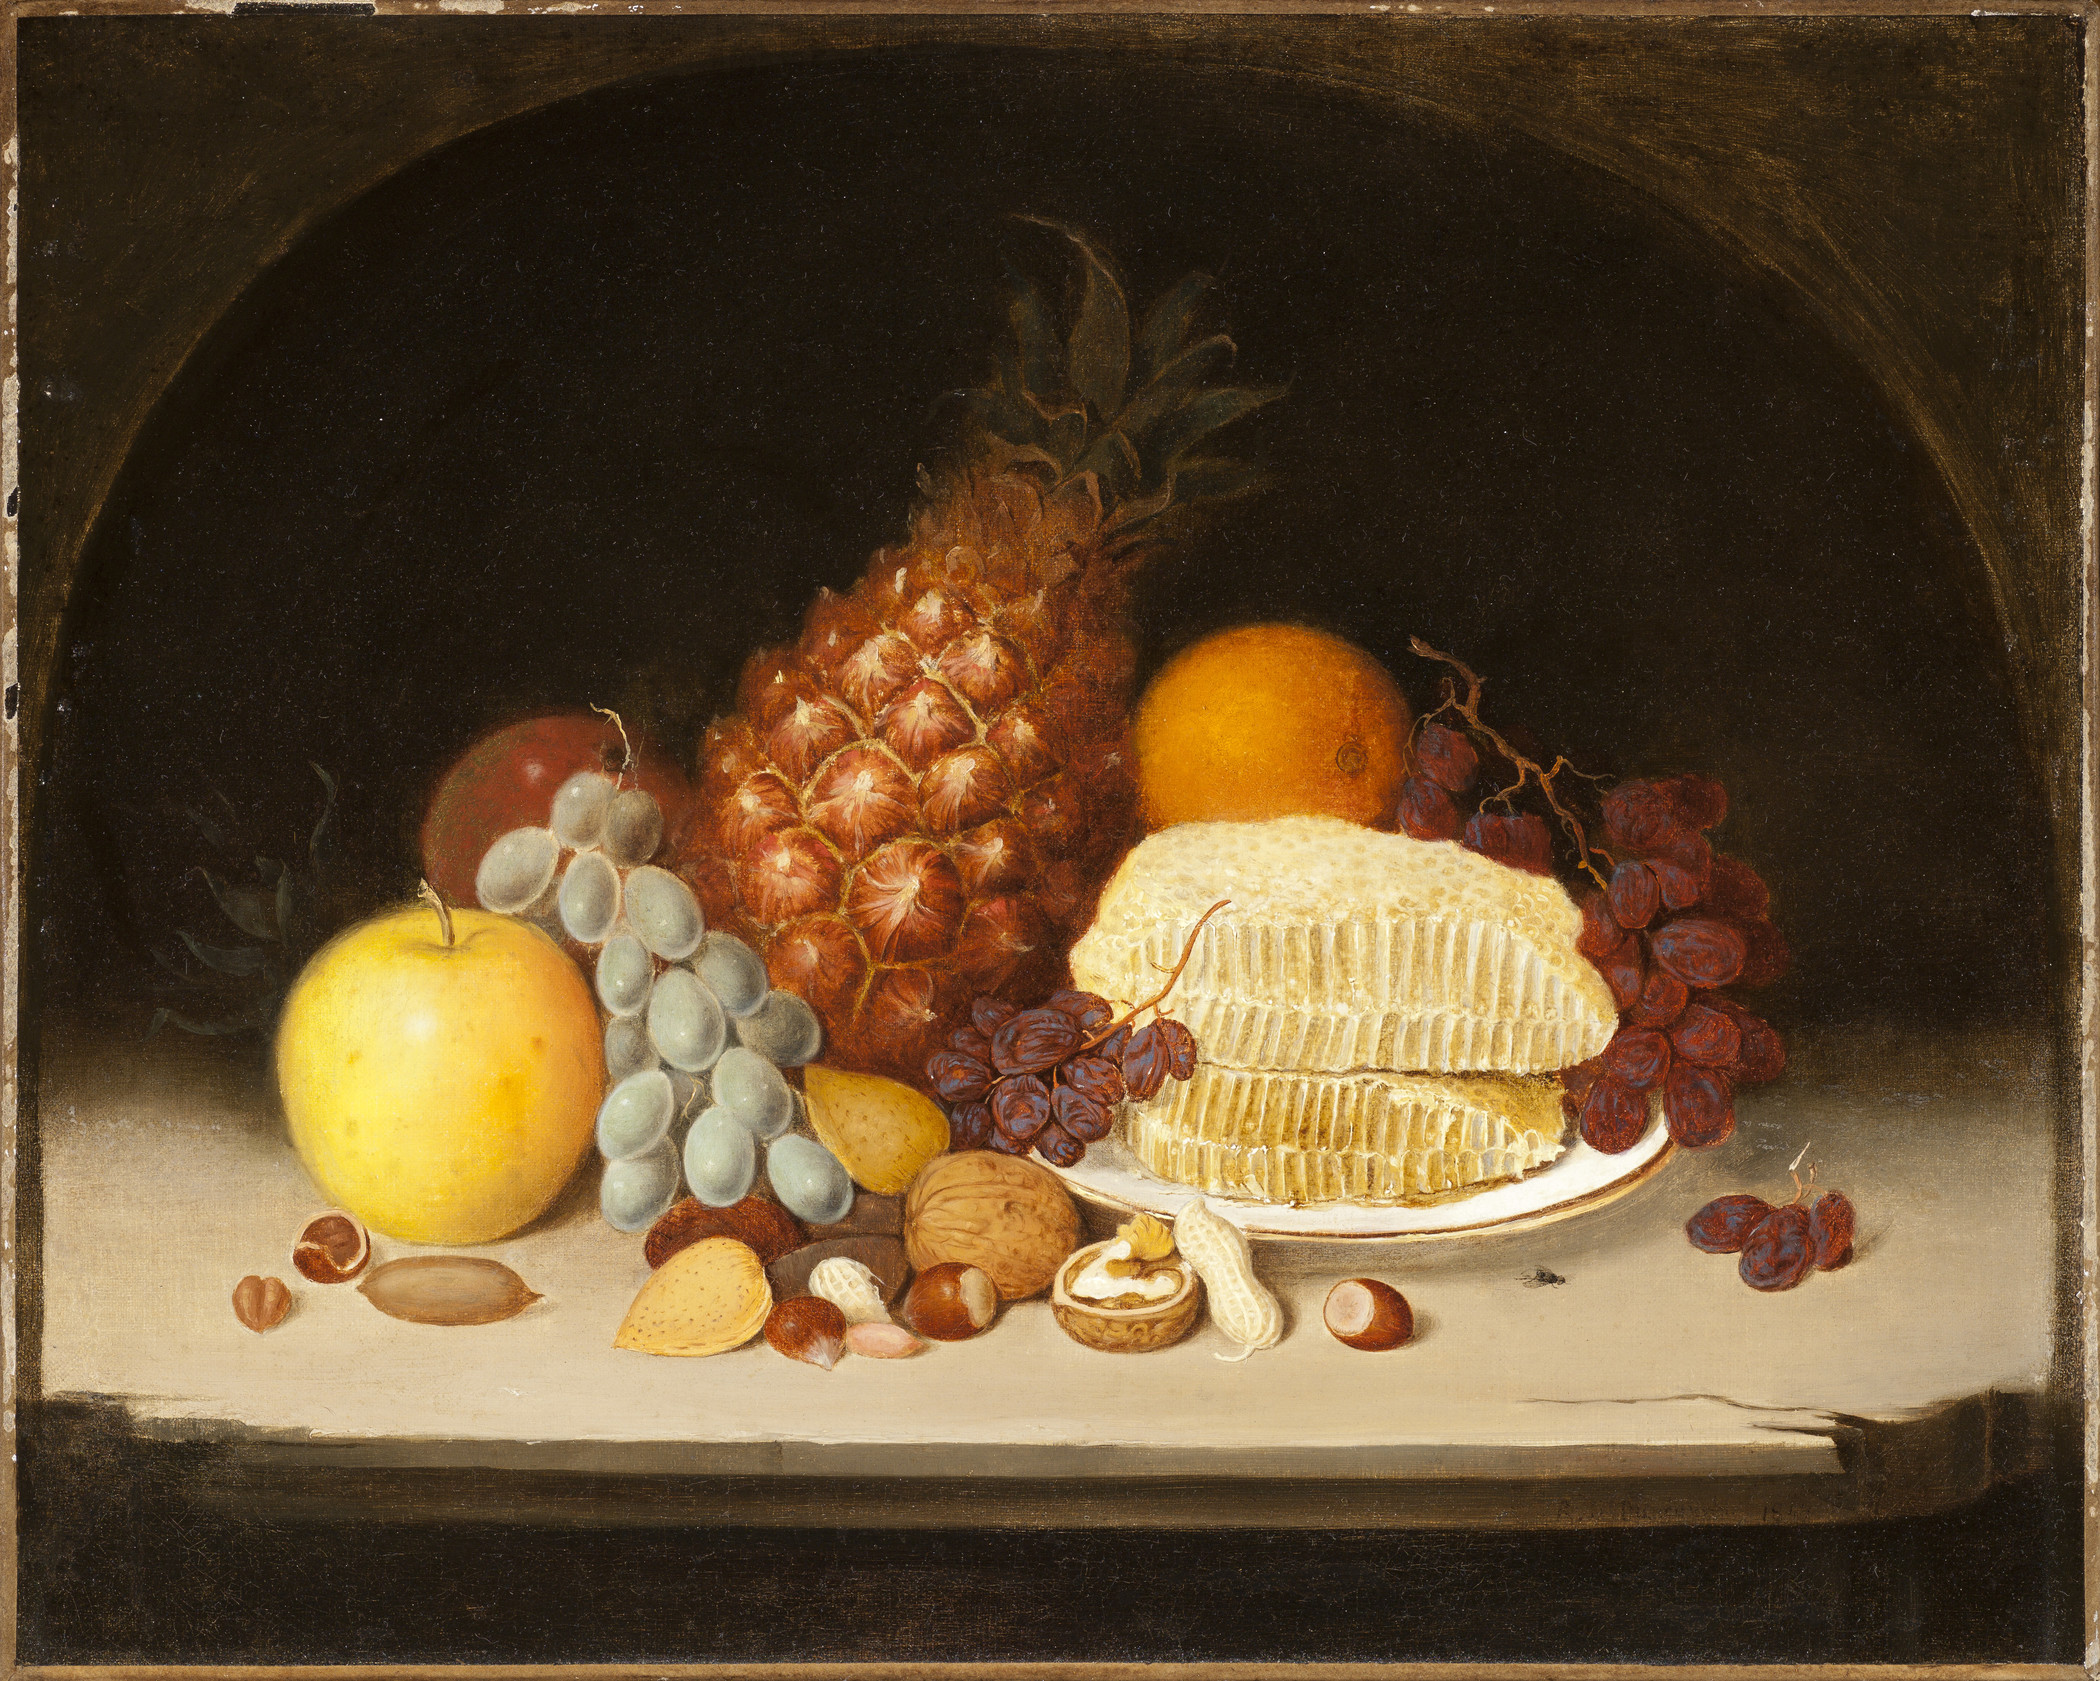 Zátiší by Robert Duncanson - 1849 - 41 x 51,28 cm 